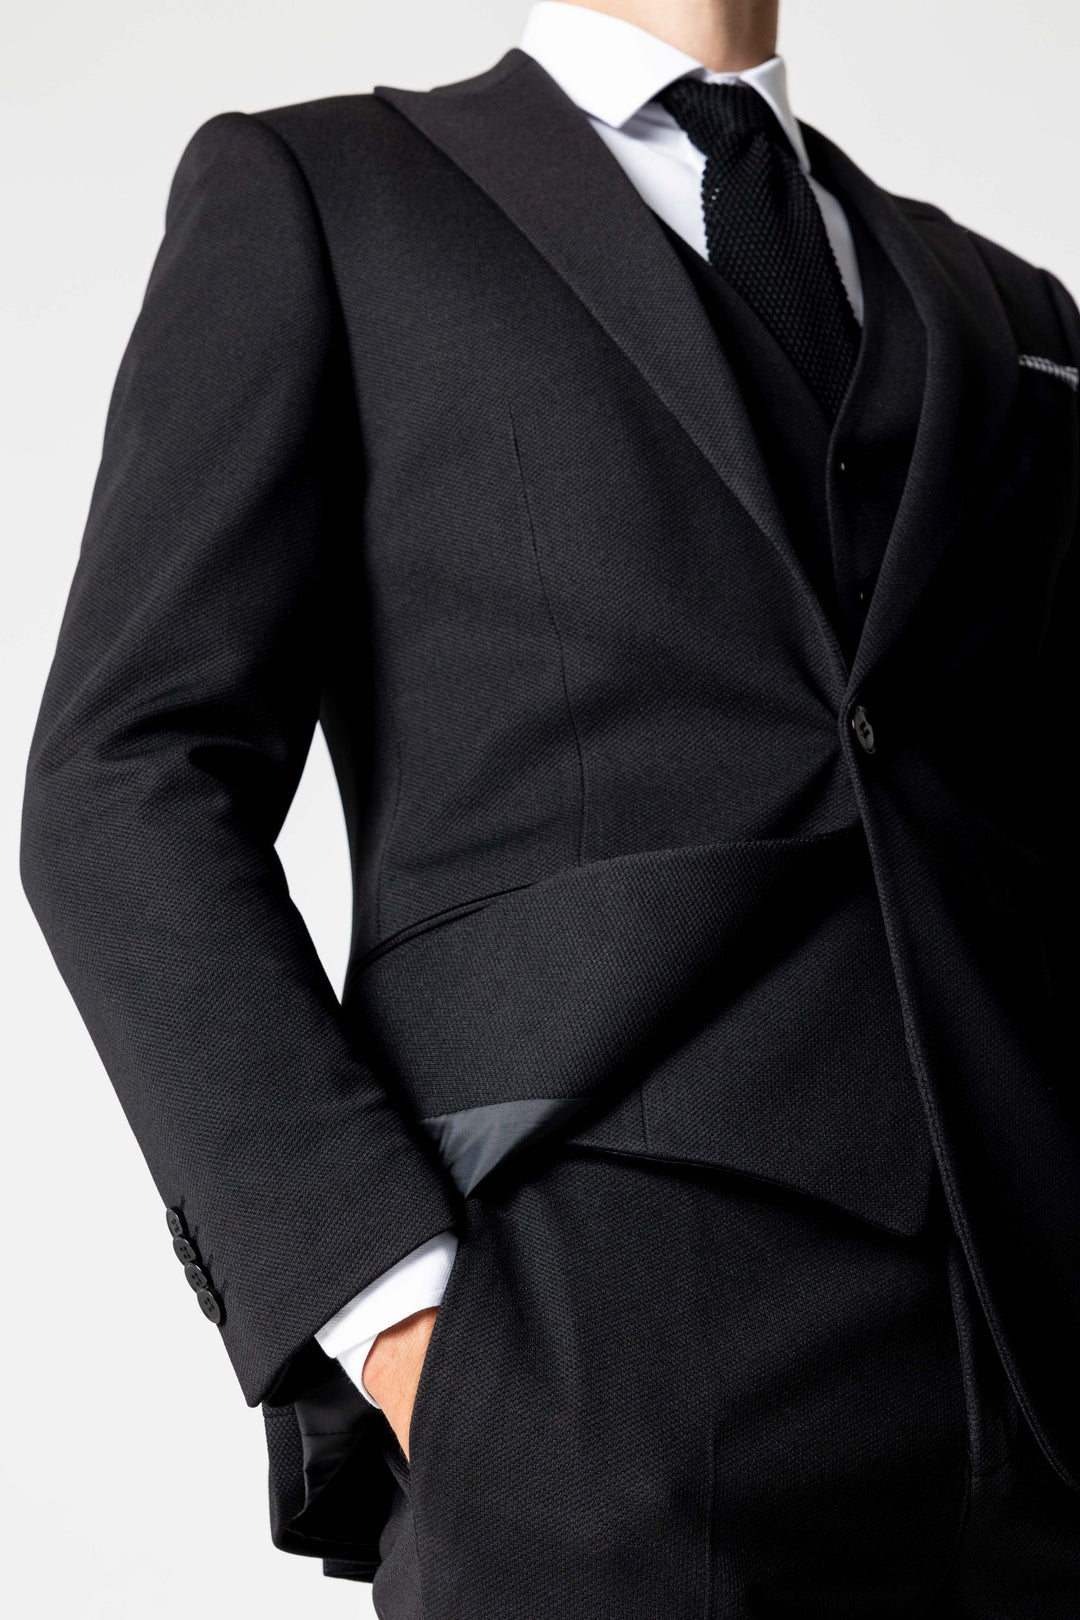 Three-piece black suit